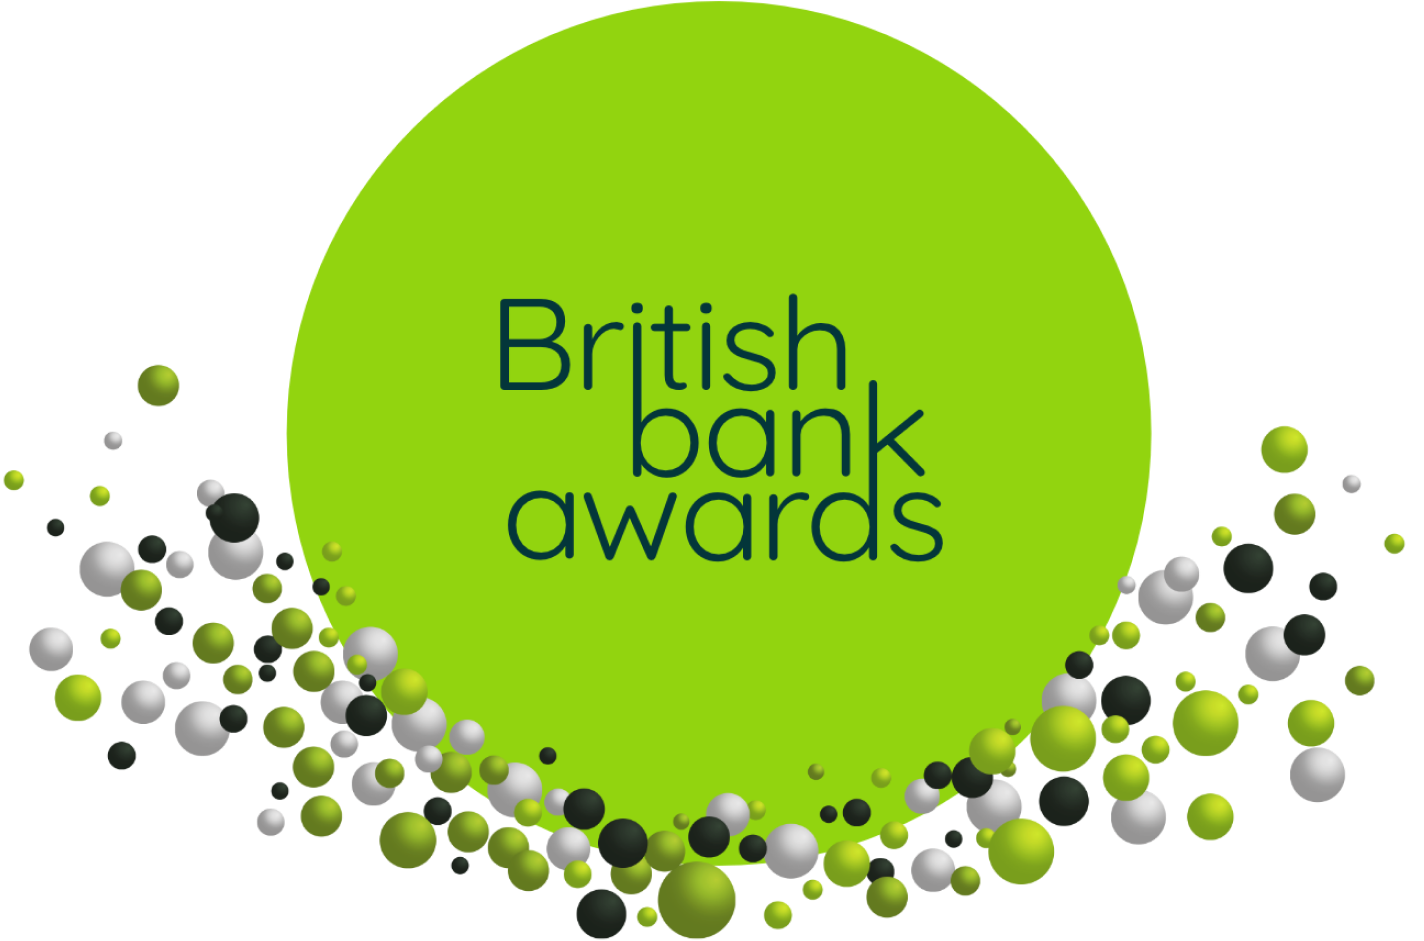 British bank awards image